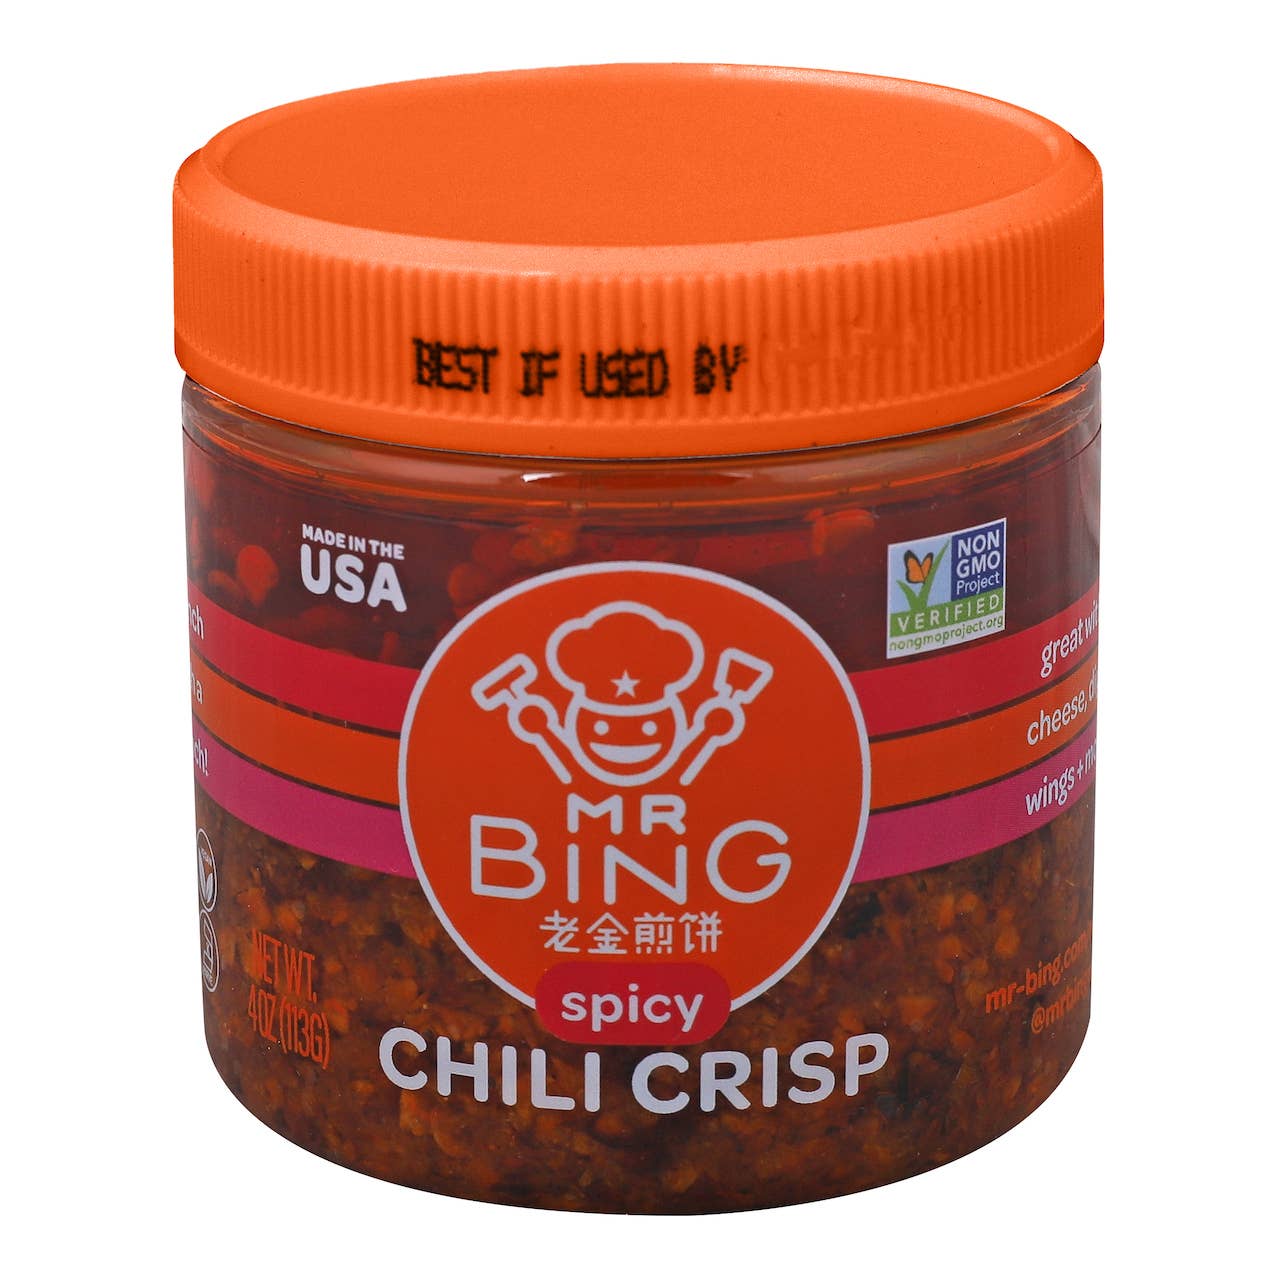 Mr Bing Spicy Chili Crisp, 4 oz